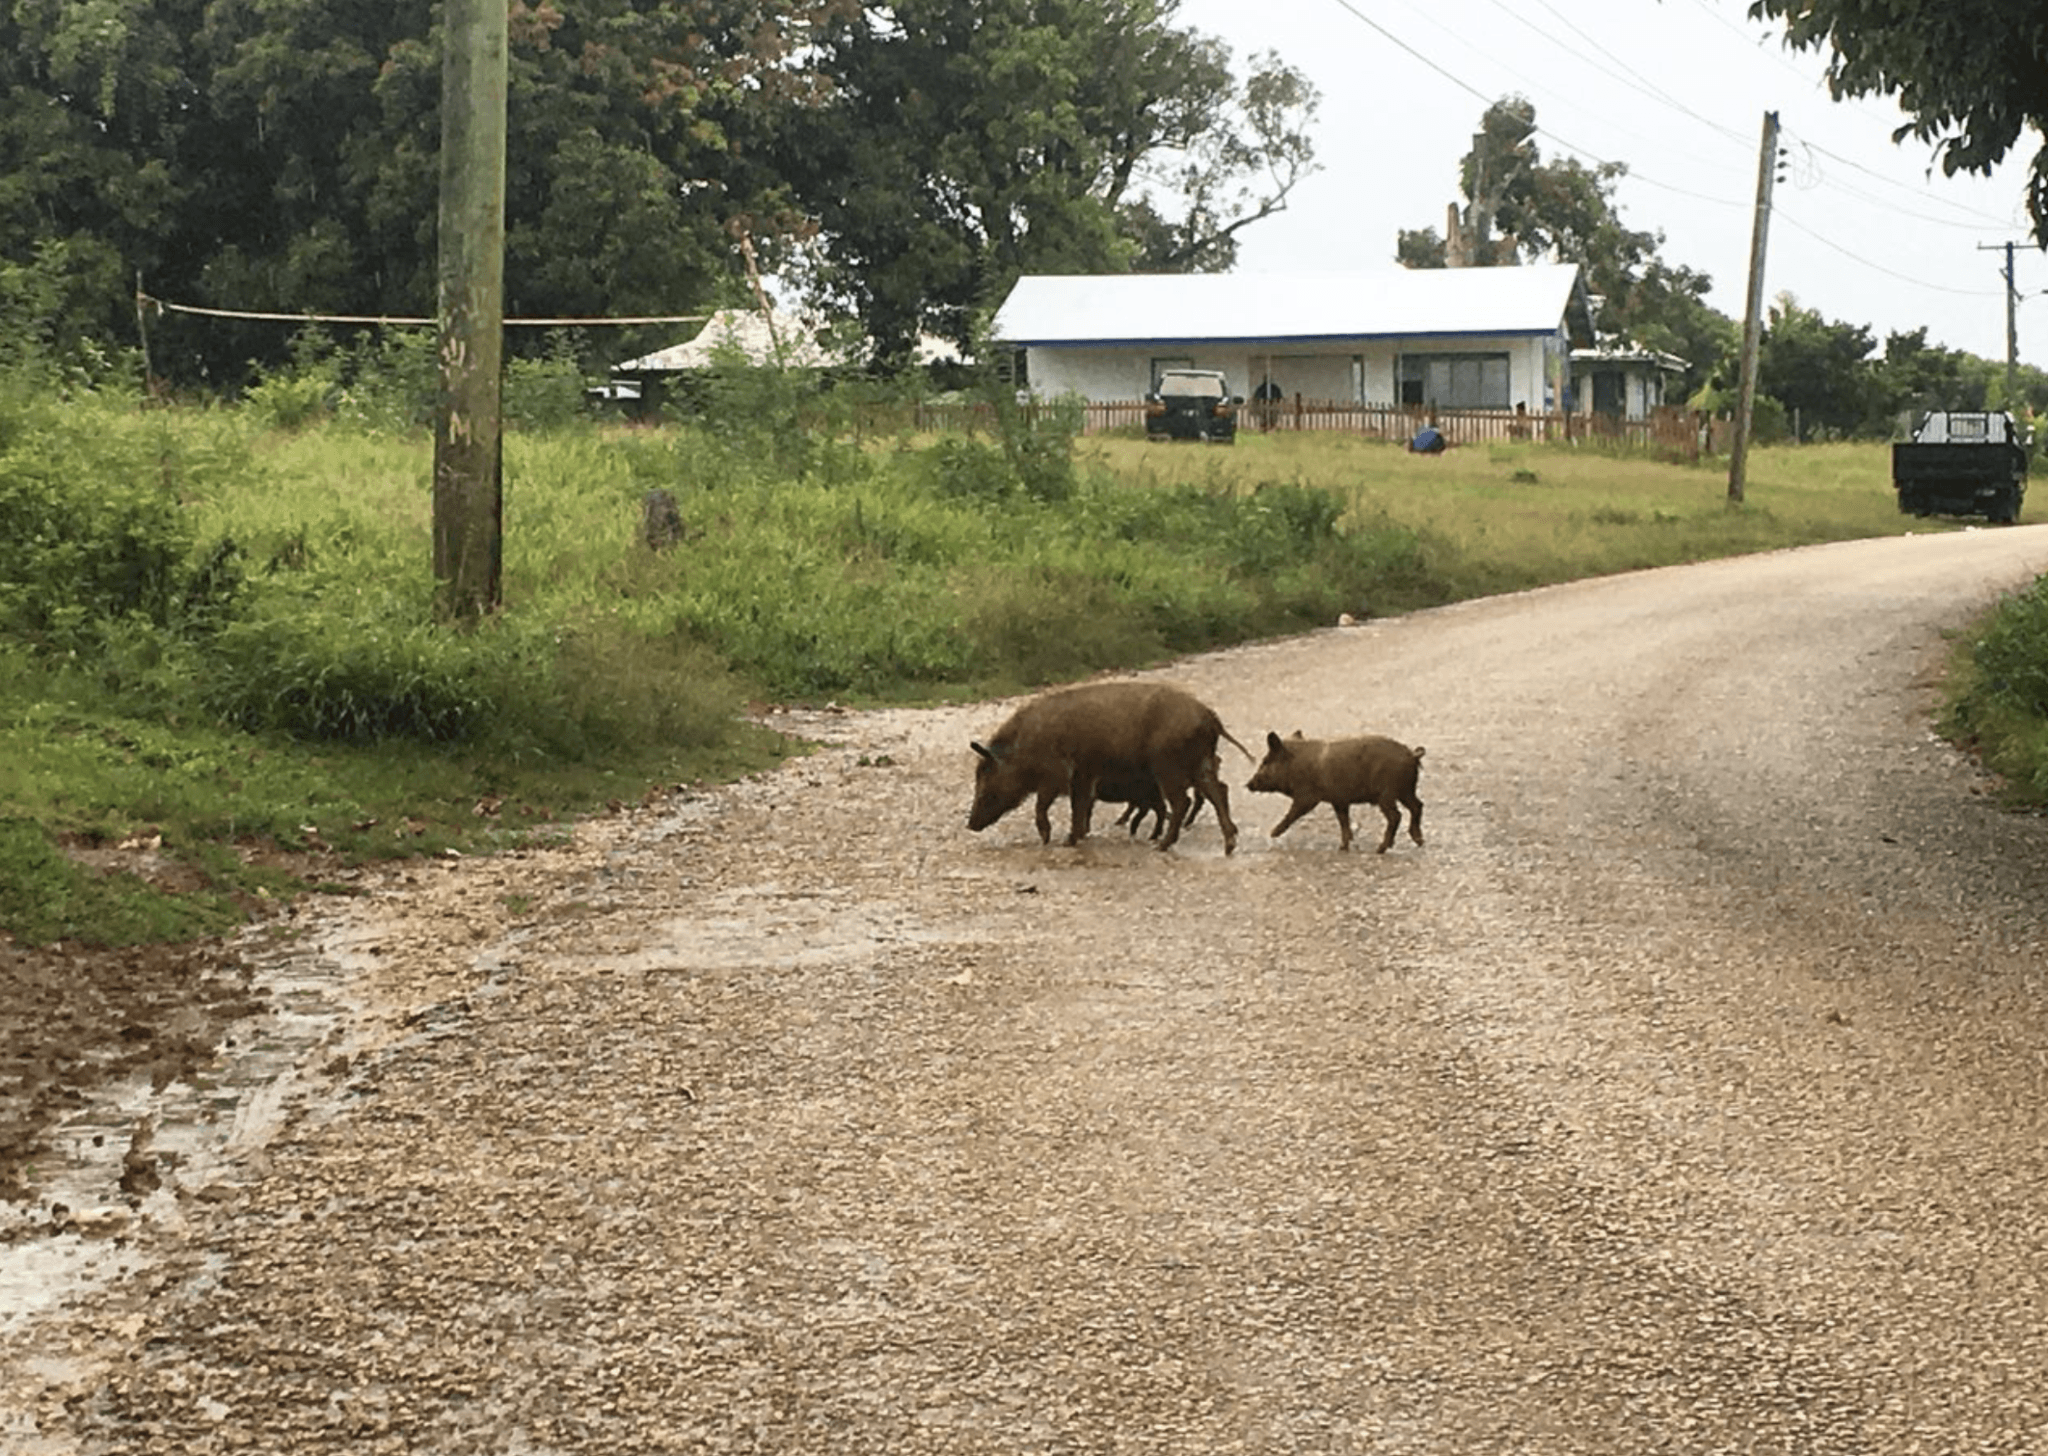 Pigs crossing the road in Tonga